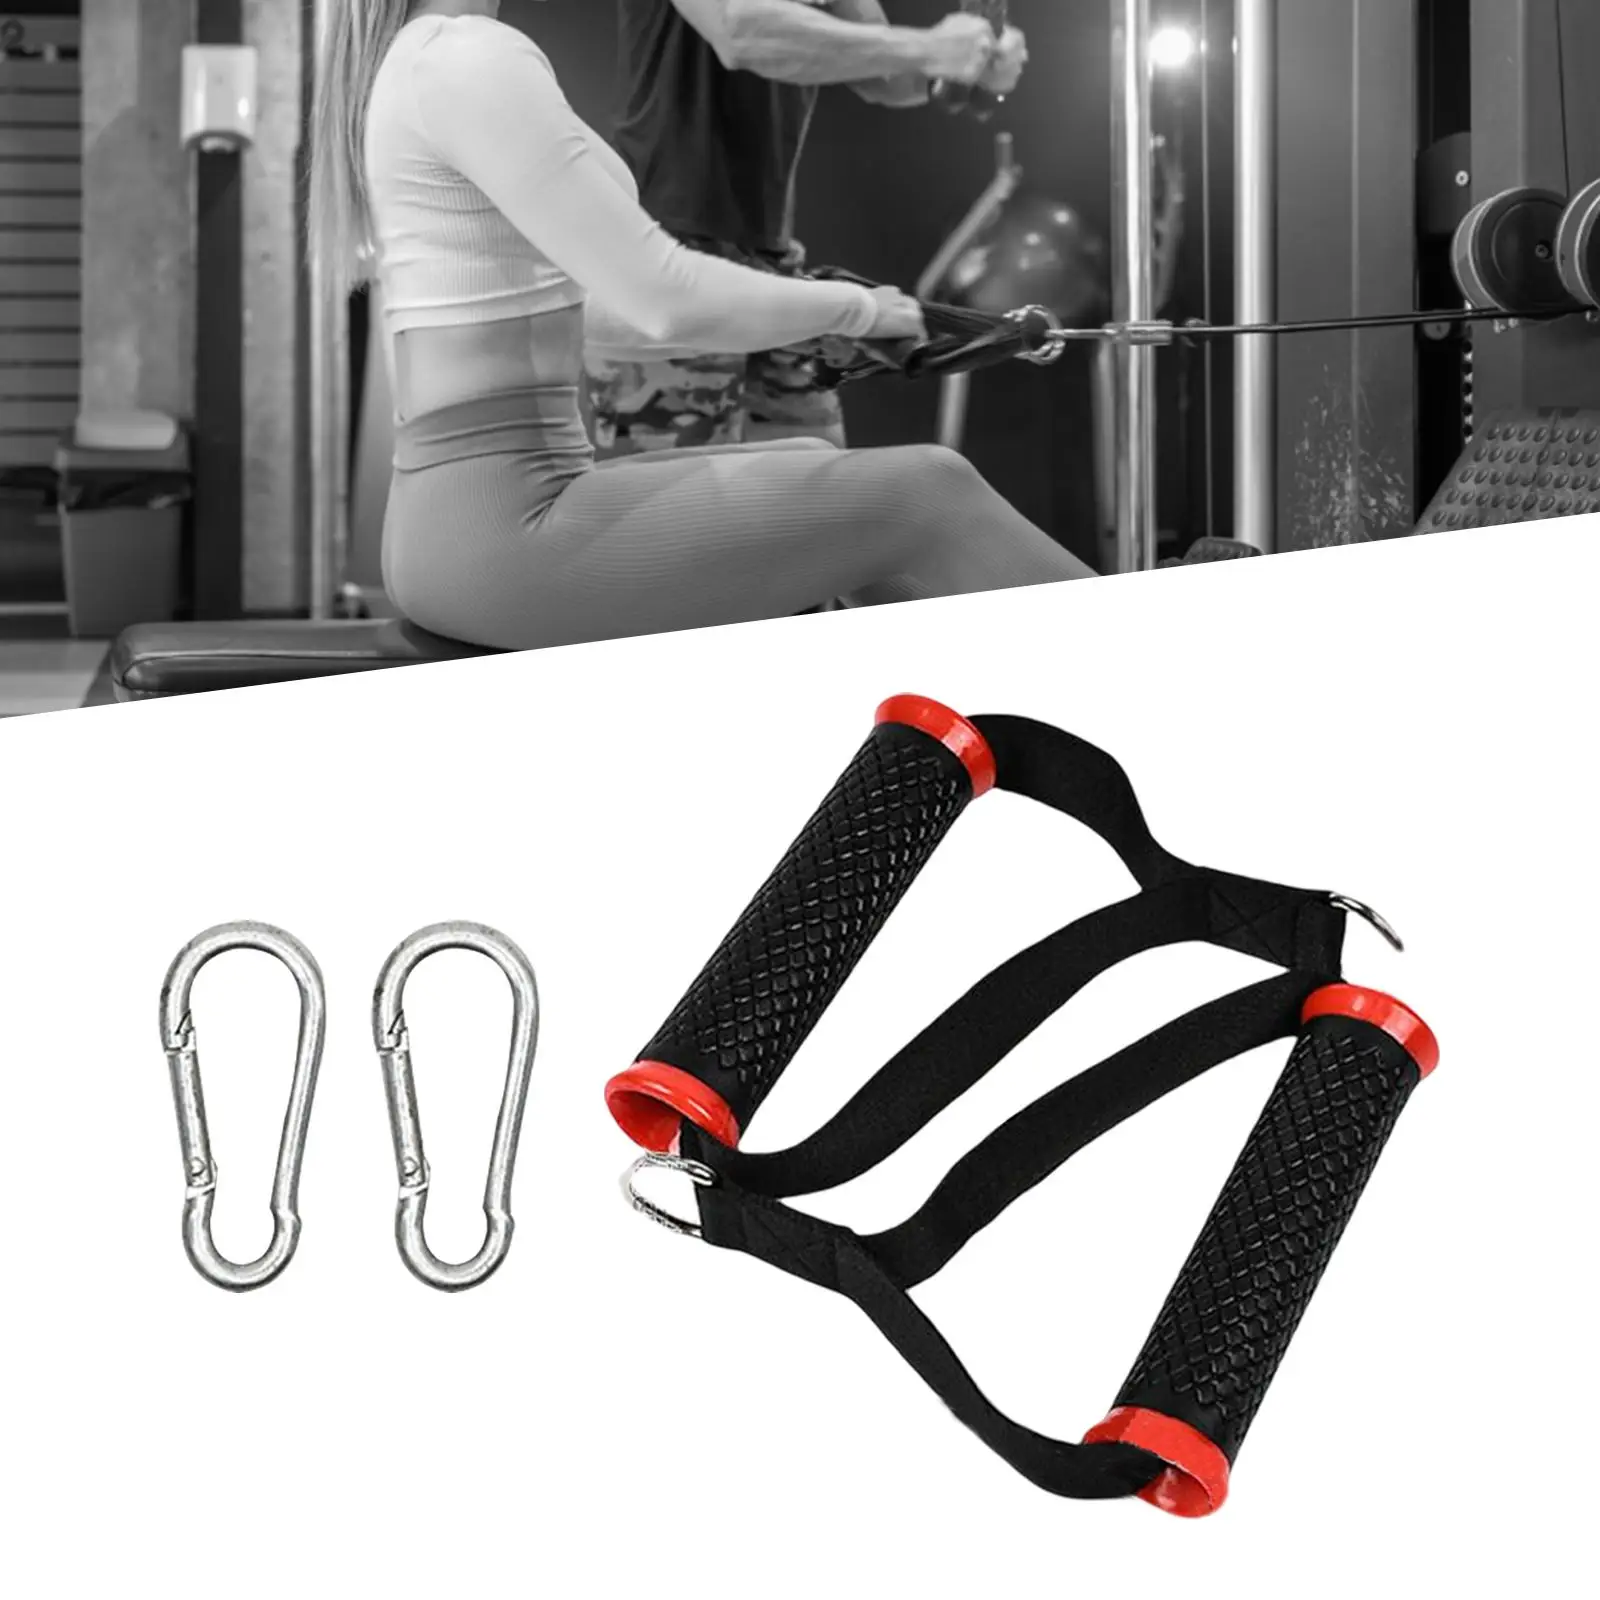 2x Universal Gym Handles Exercise Equipment Heavy Duty Gym Accessory LAT Row Bar